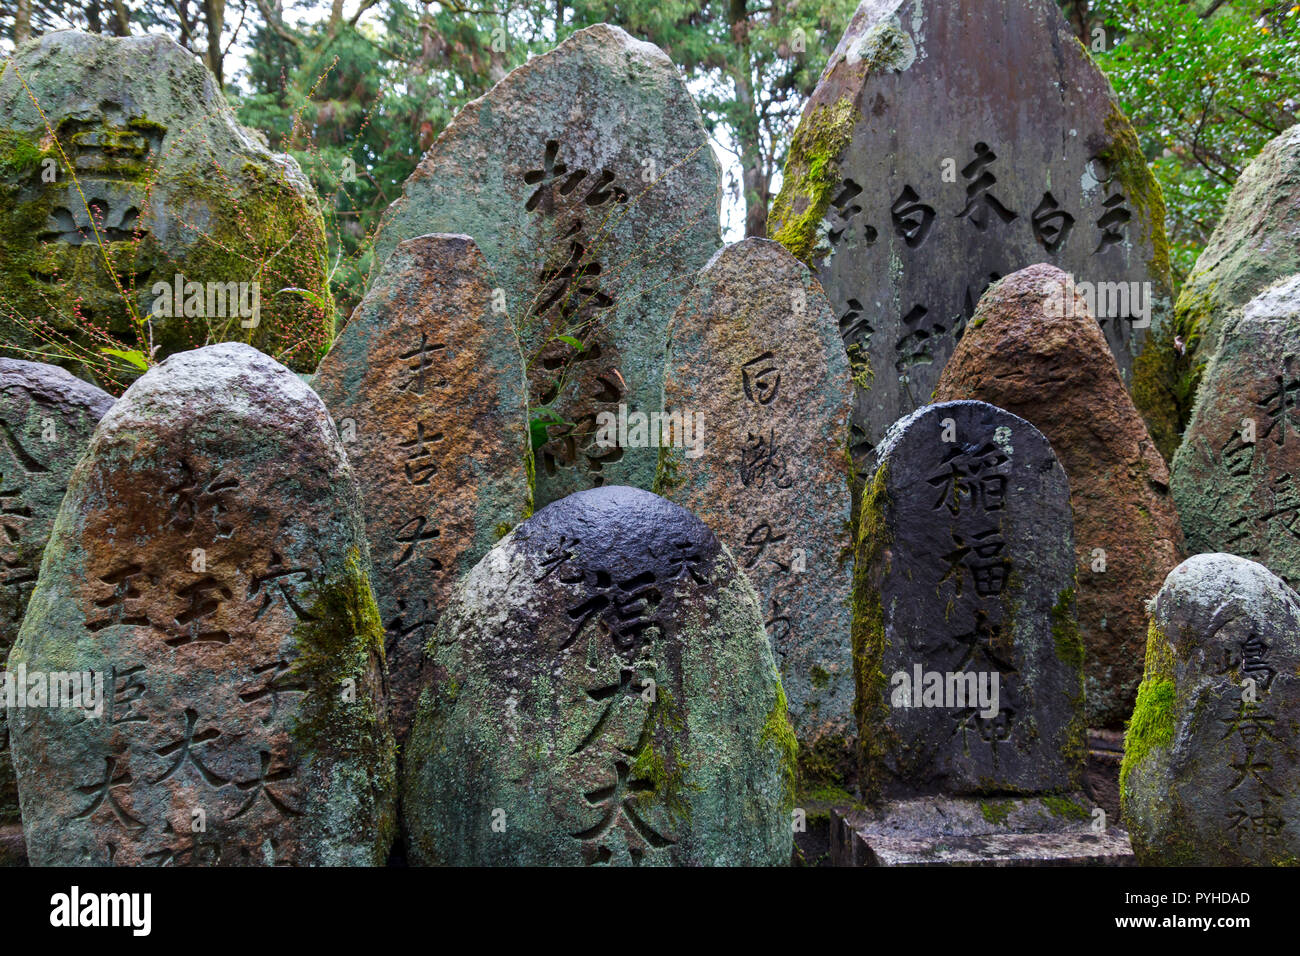 Japanese text 'kanji's' carved in stones in Kyoto, Japan Stock Photo